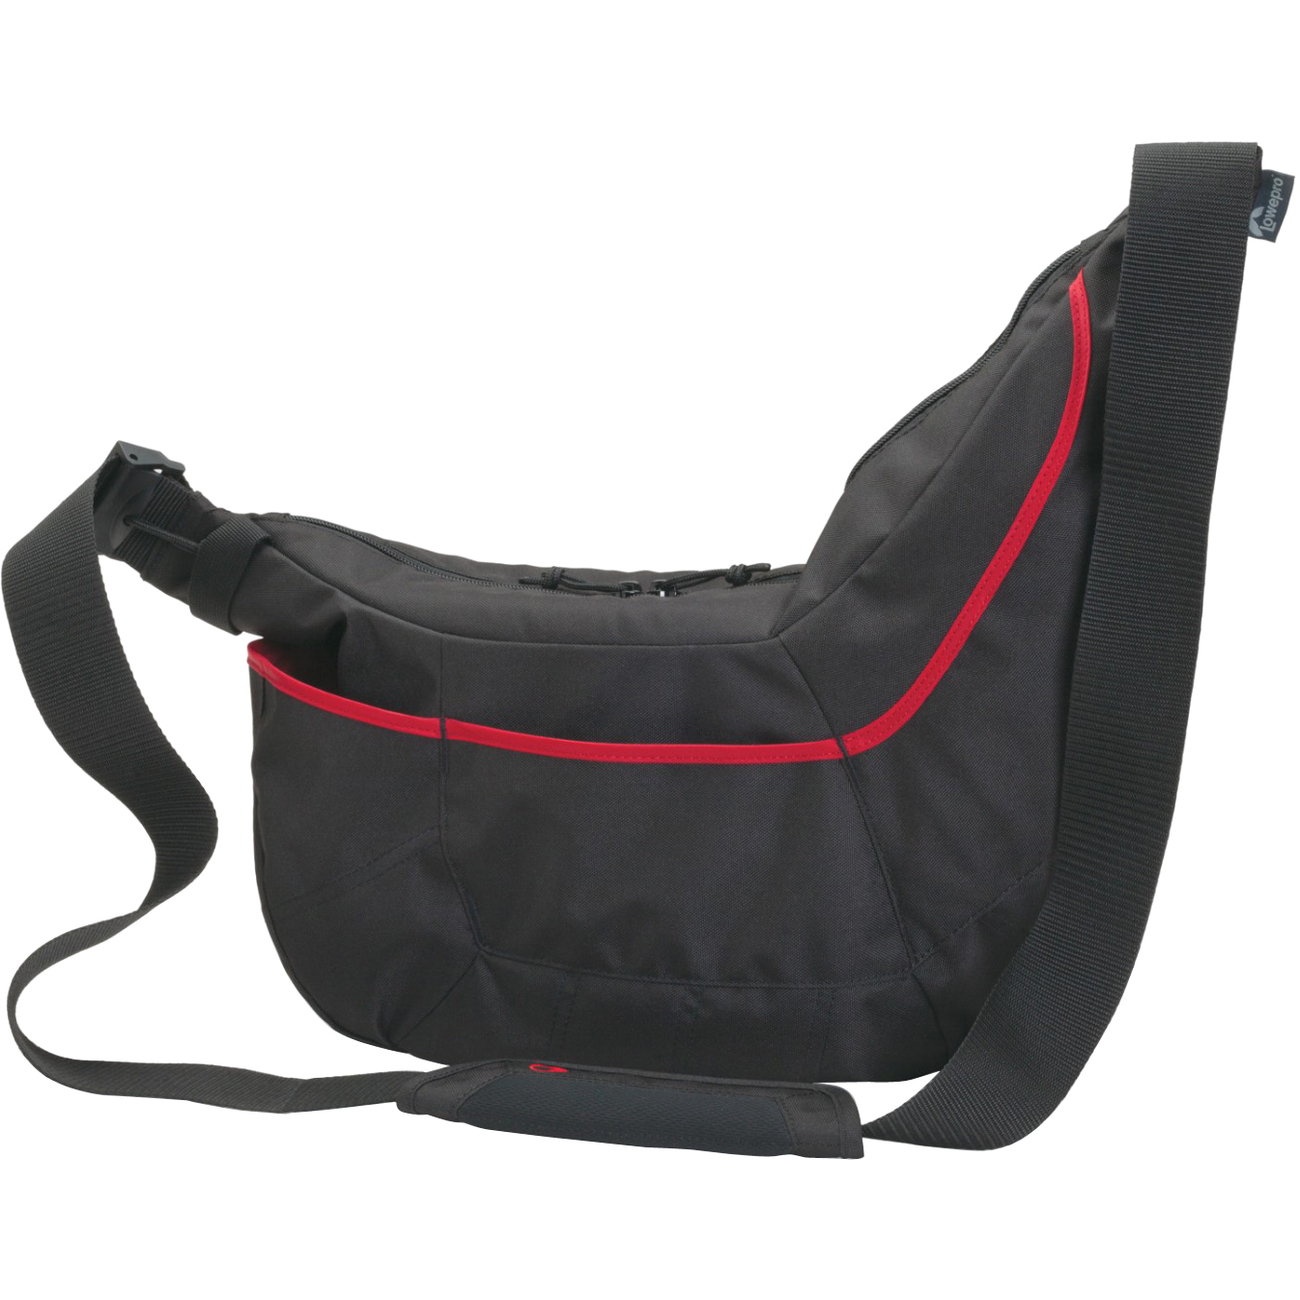 Lowepro Passport sling II black/red bag